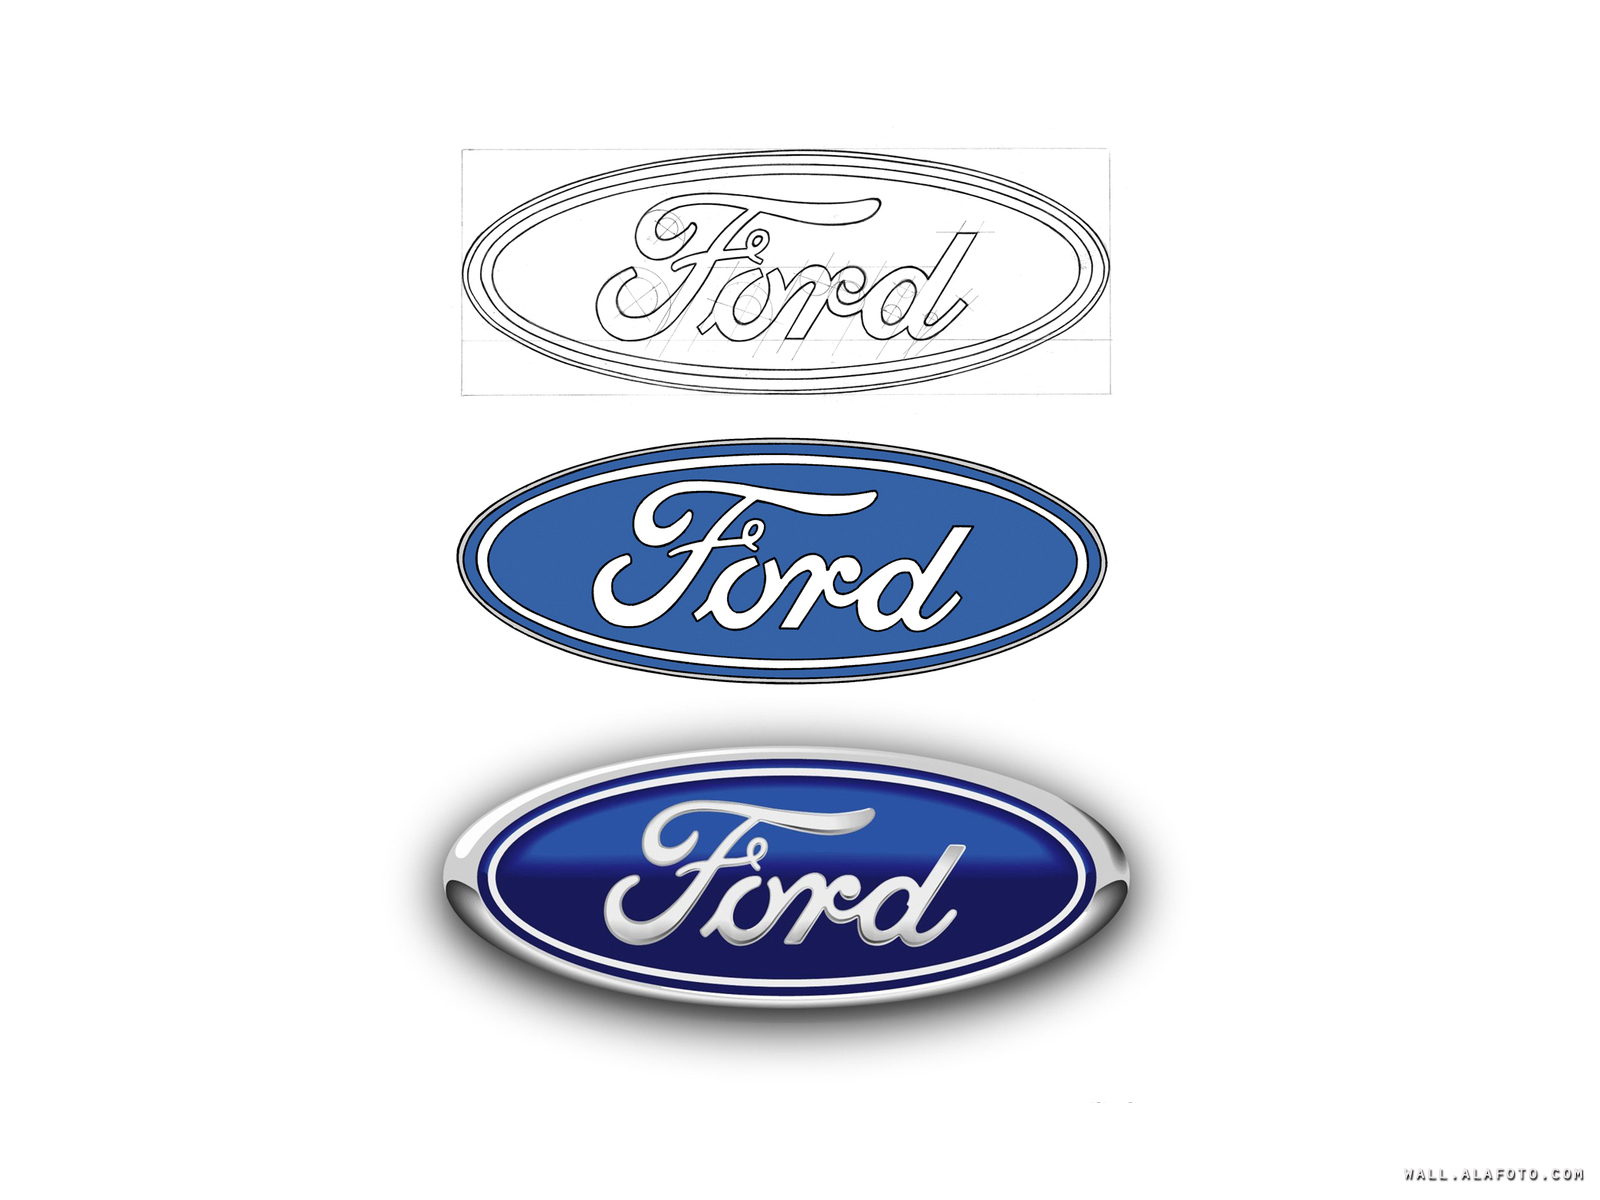 Ford Cars Logos   Ford logo 101   Alafoto Wallpapers 1600x1200